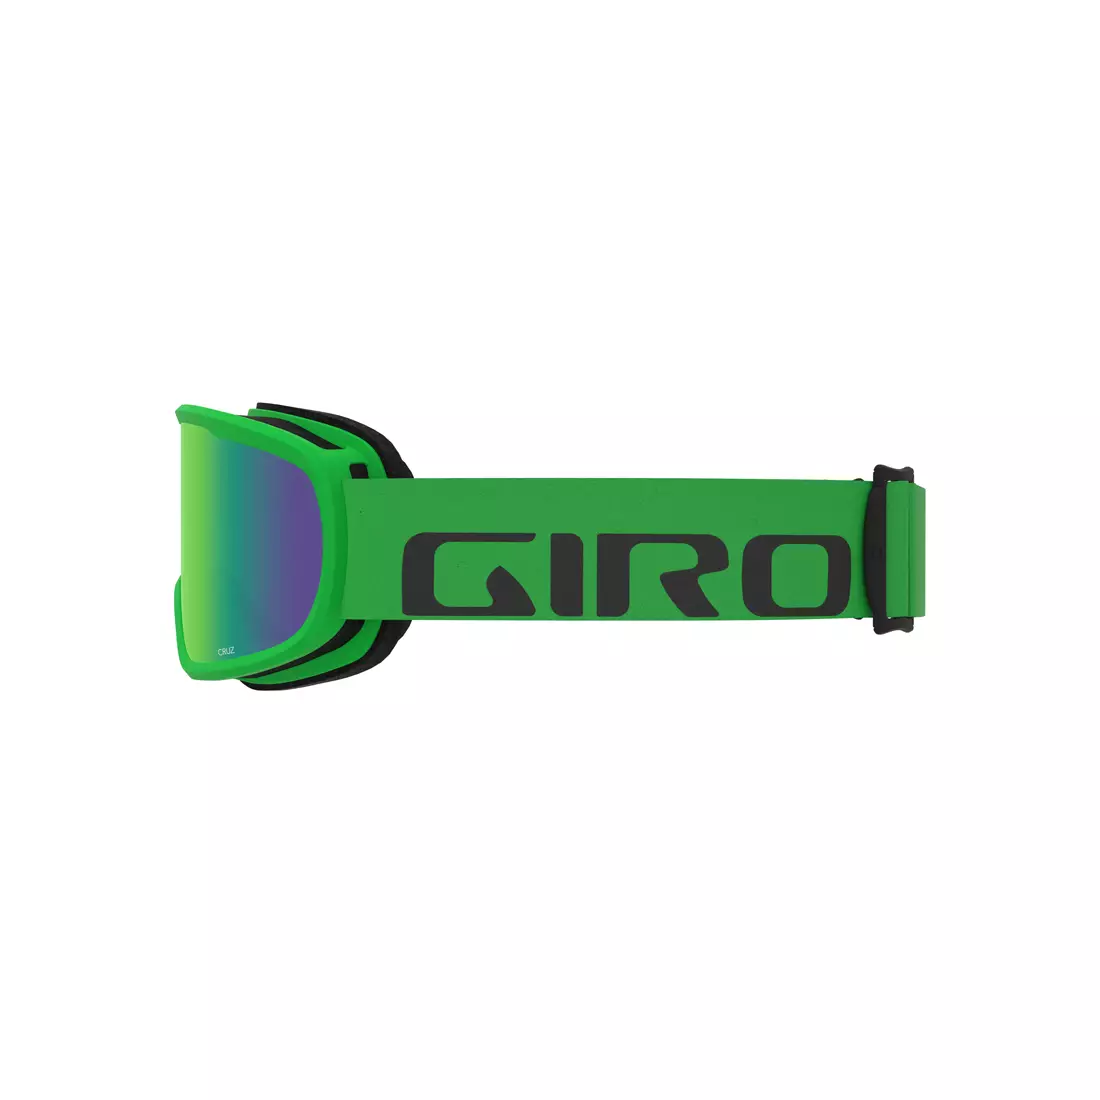 Lyžiarske / snowboardové okuliare GIRO CRUZ BRIGHT GREEN WORDMARK - GR-7083043